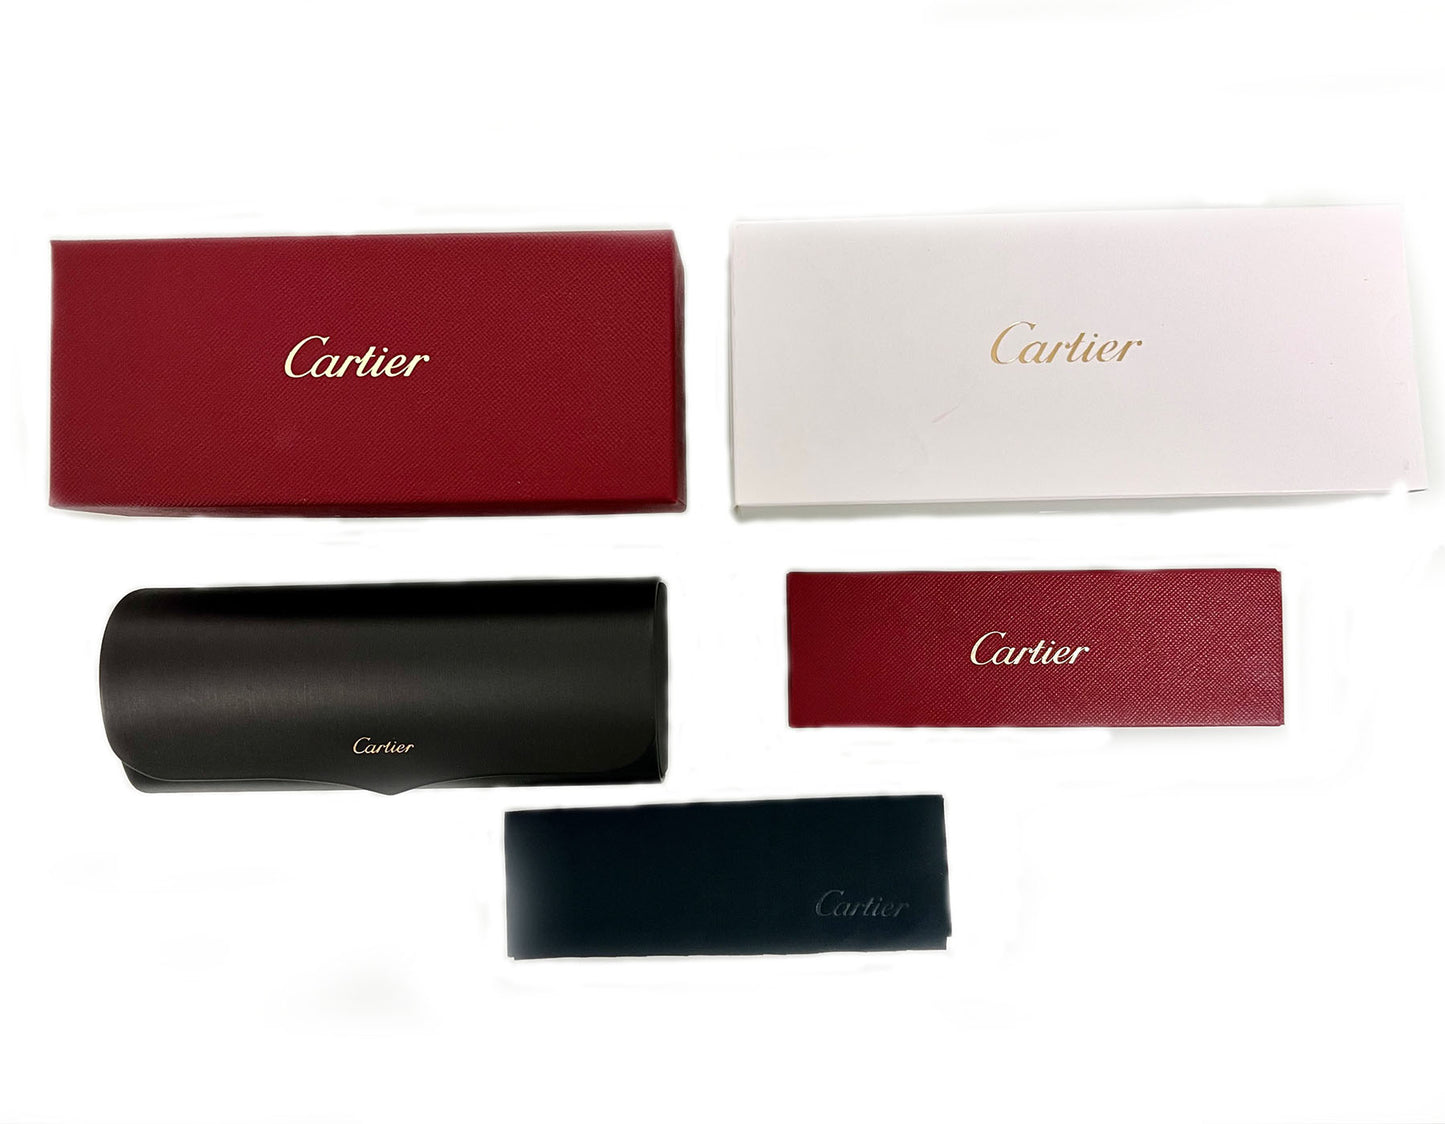 Cartier CT0273S-002-99 99mm New Sunglasses